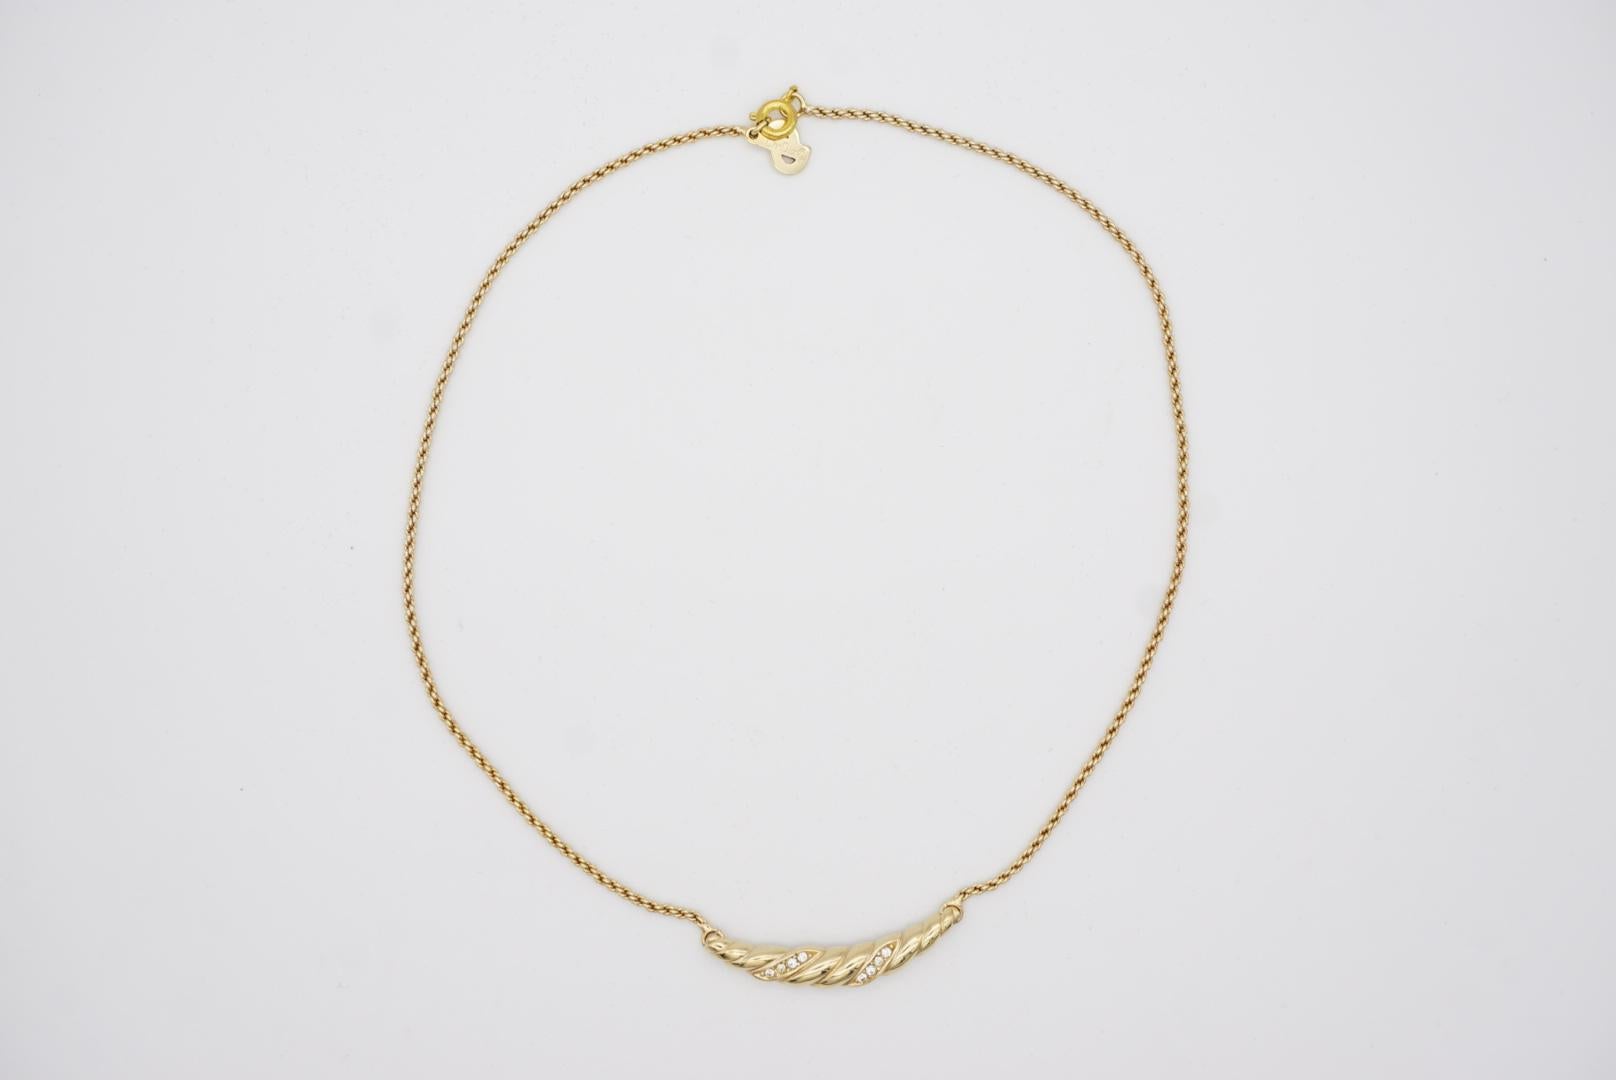 Christian Dior Vintage 1970s Long Bar Swirl Swarovski Gold Crystals Necklace For Sale 1